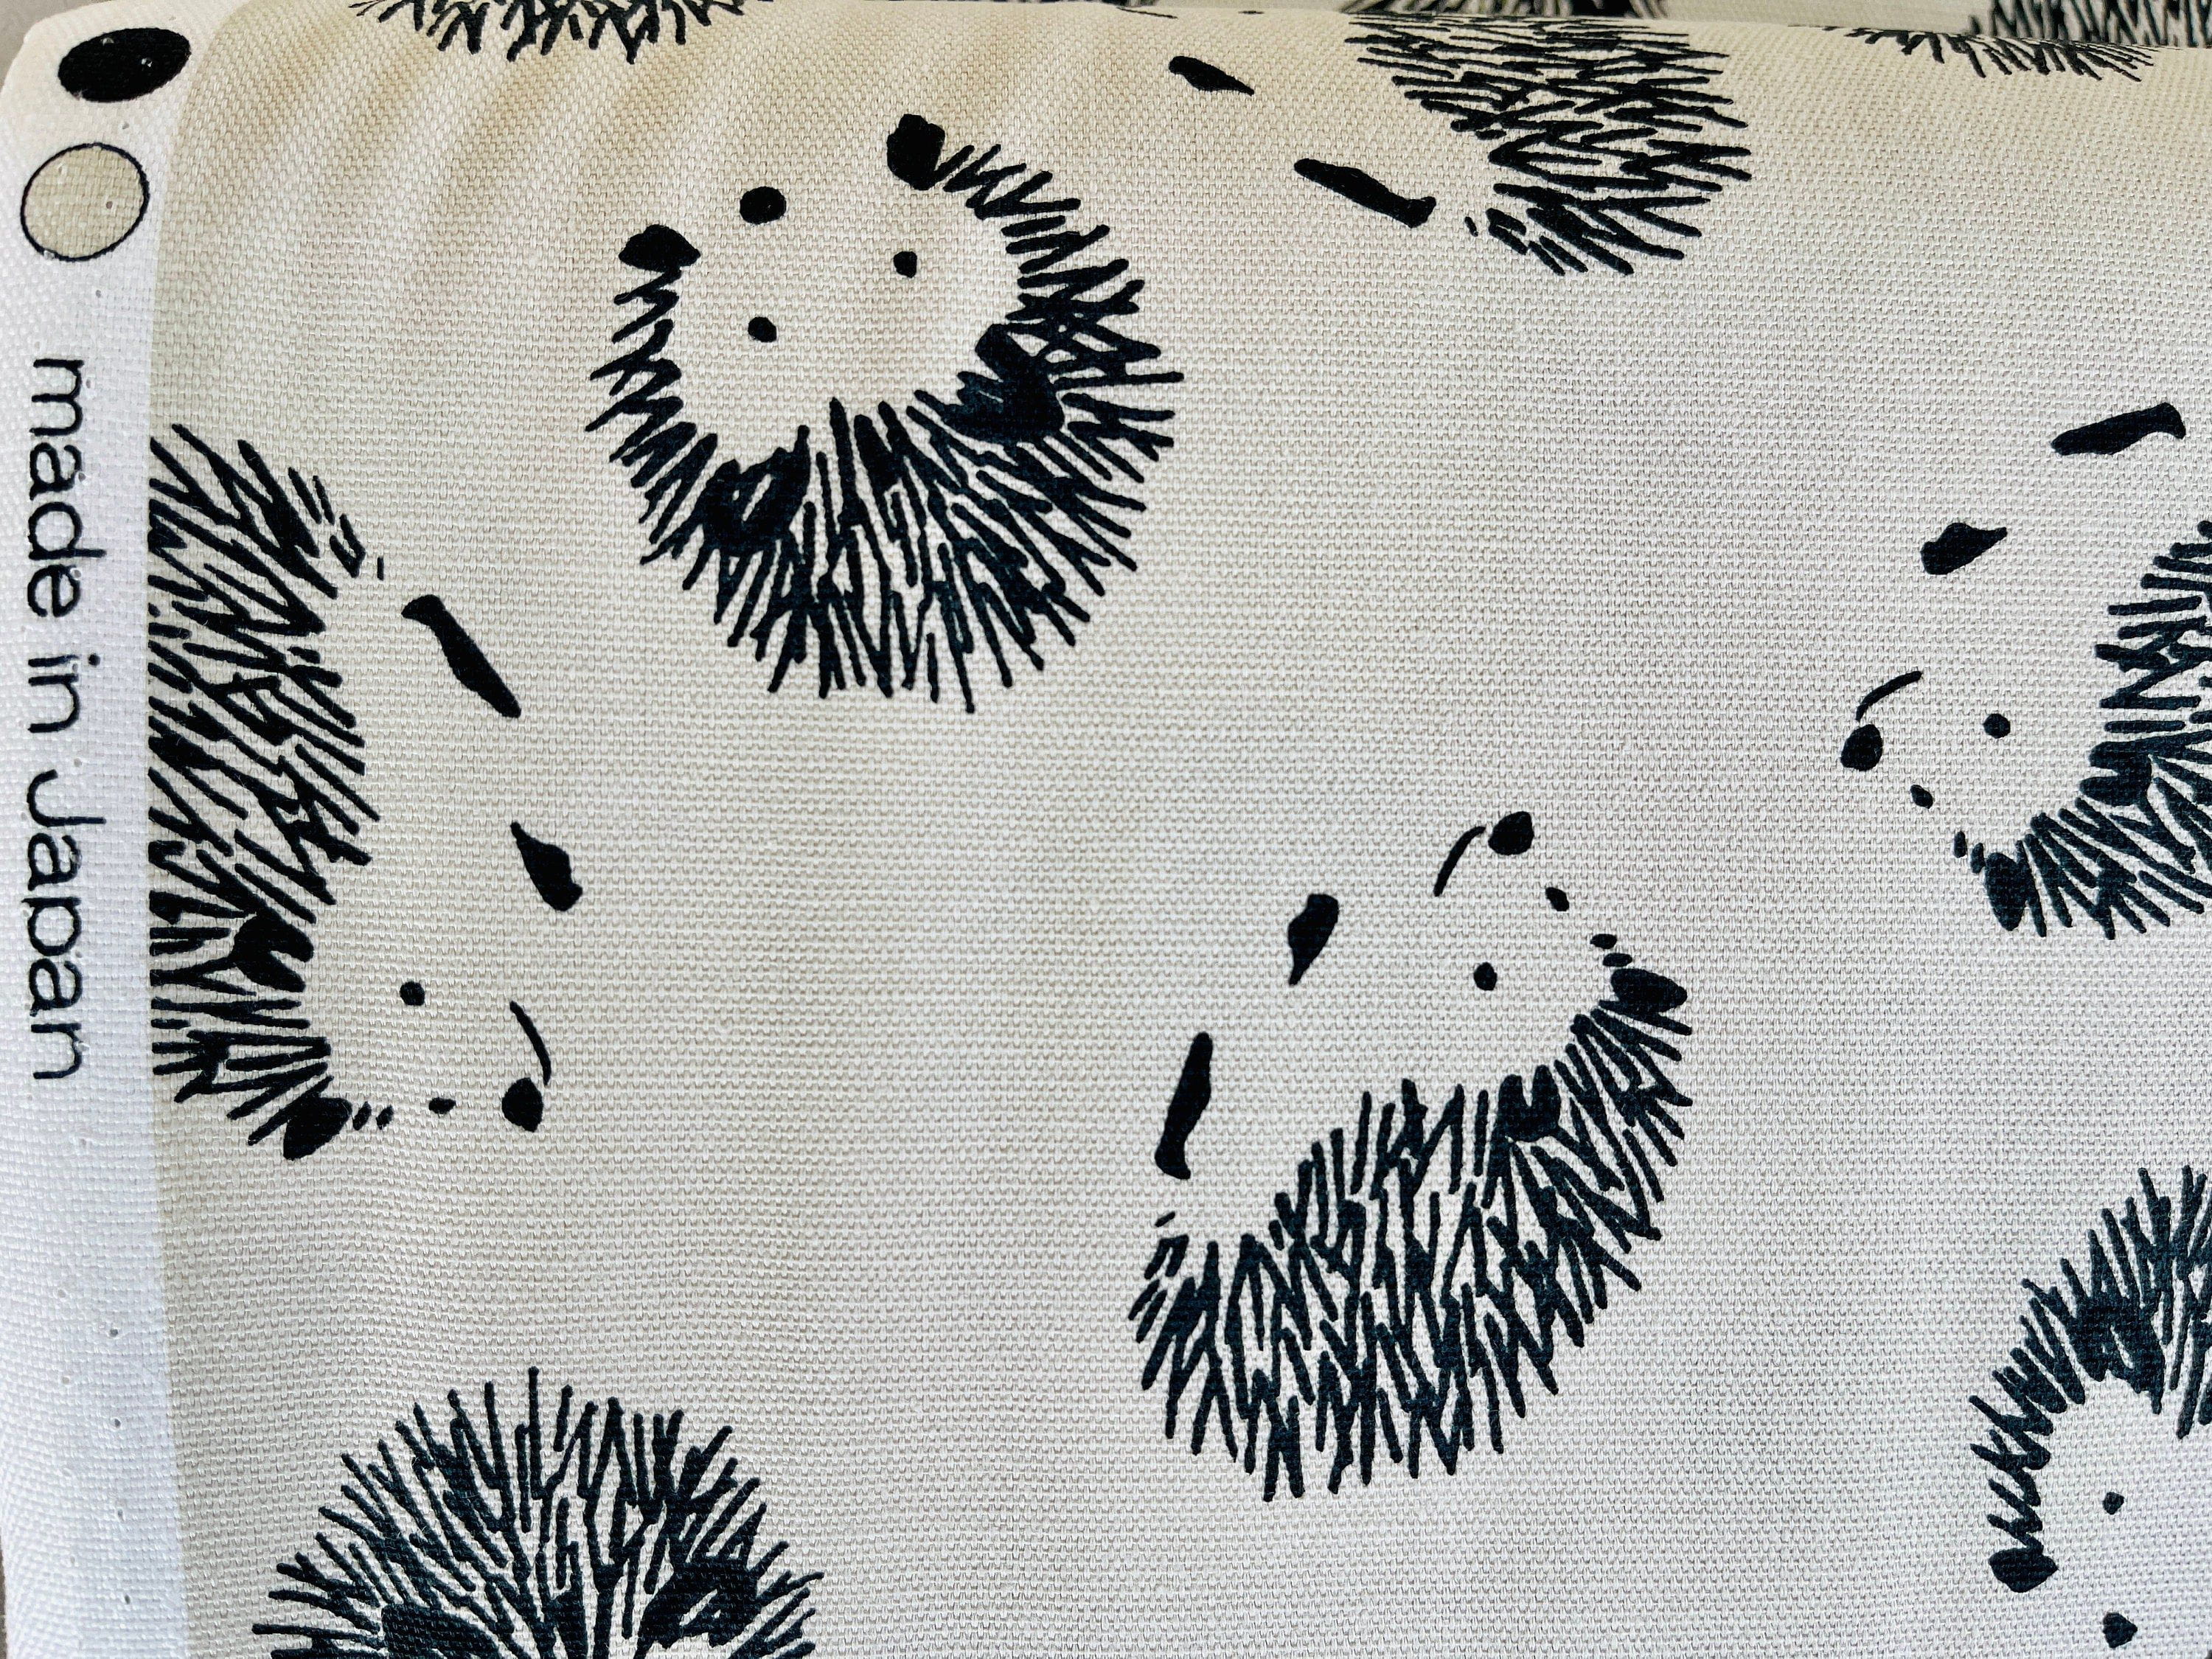 Porcupine - Hedgehog Fabric - Japanese Fabric - Cotton Oxford Fabric - H-7097 - 2A